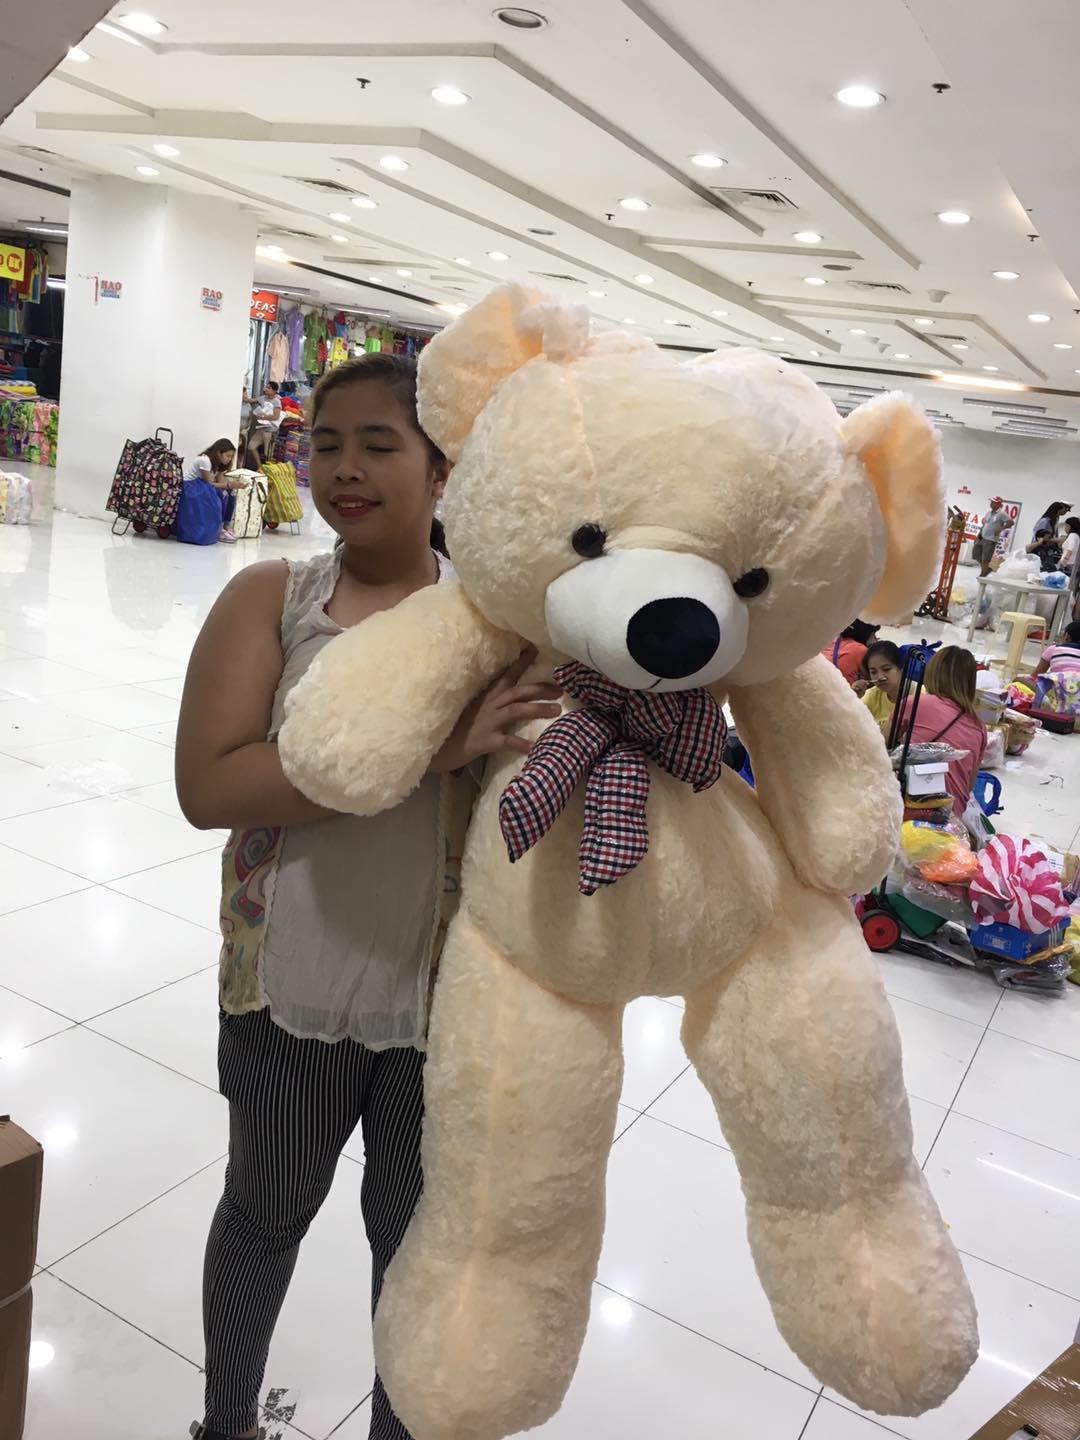 super size teddy bear